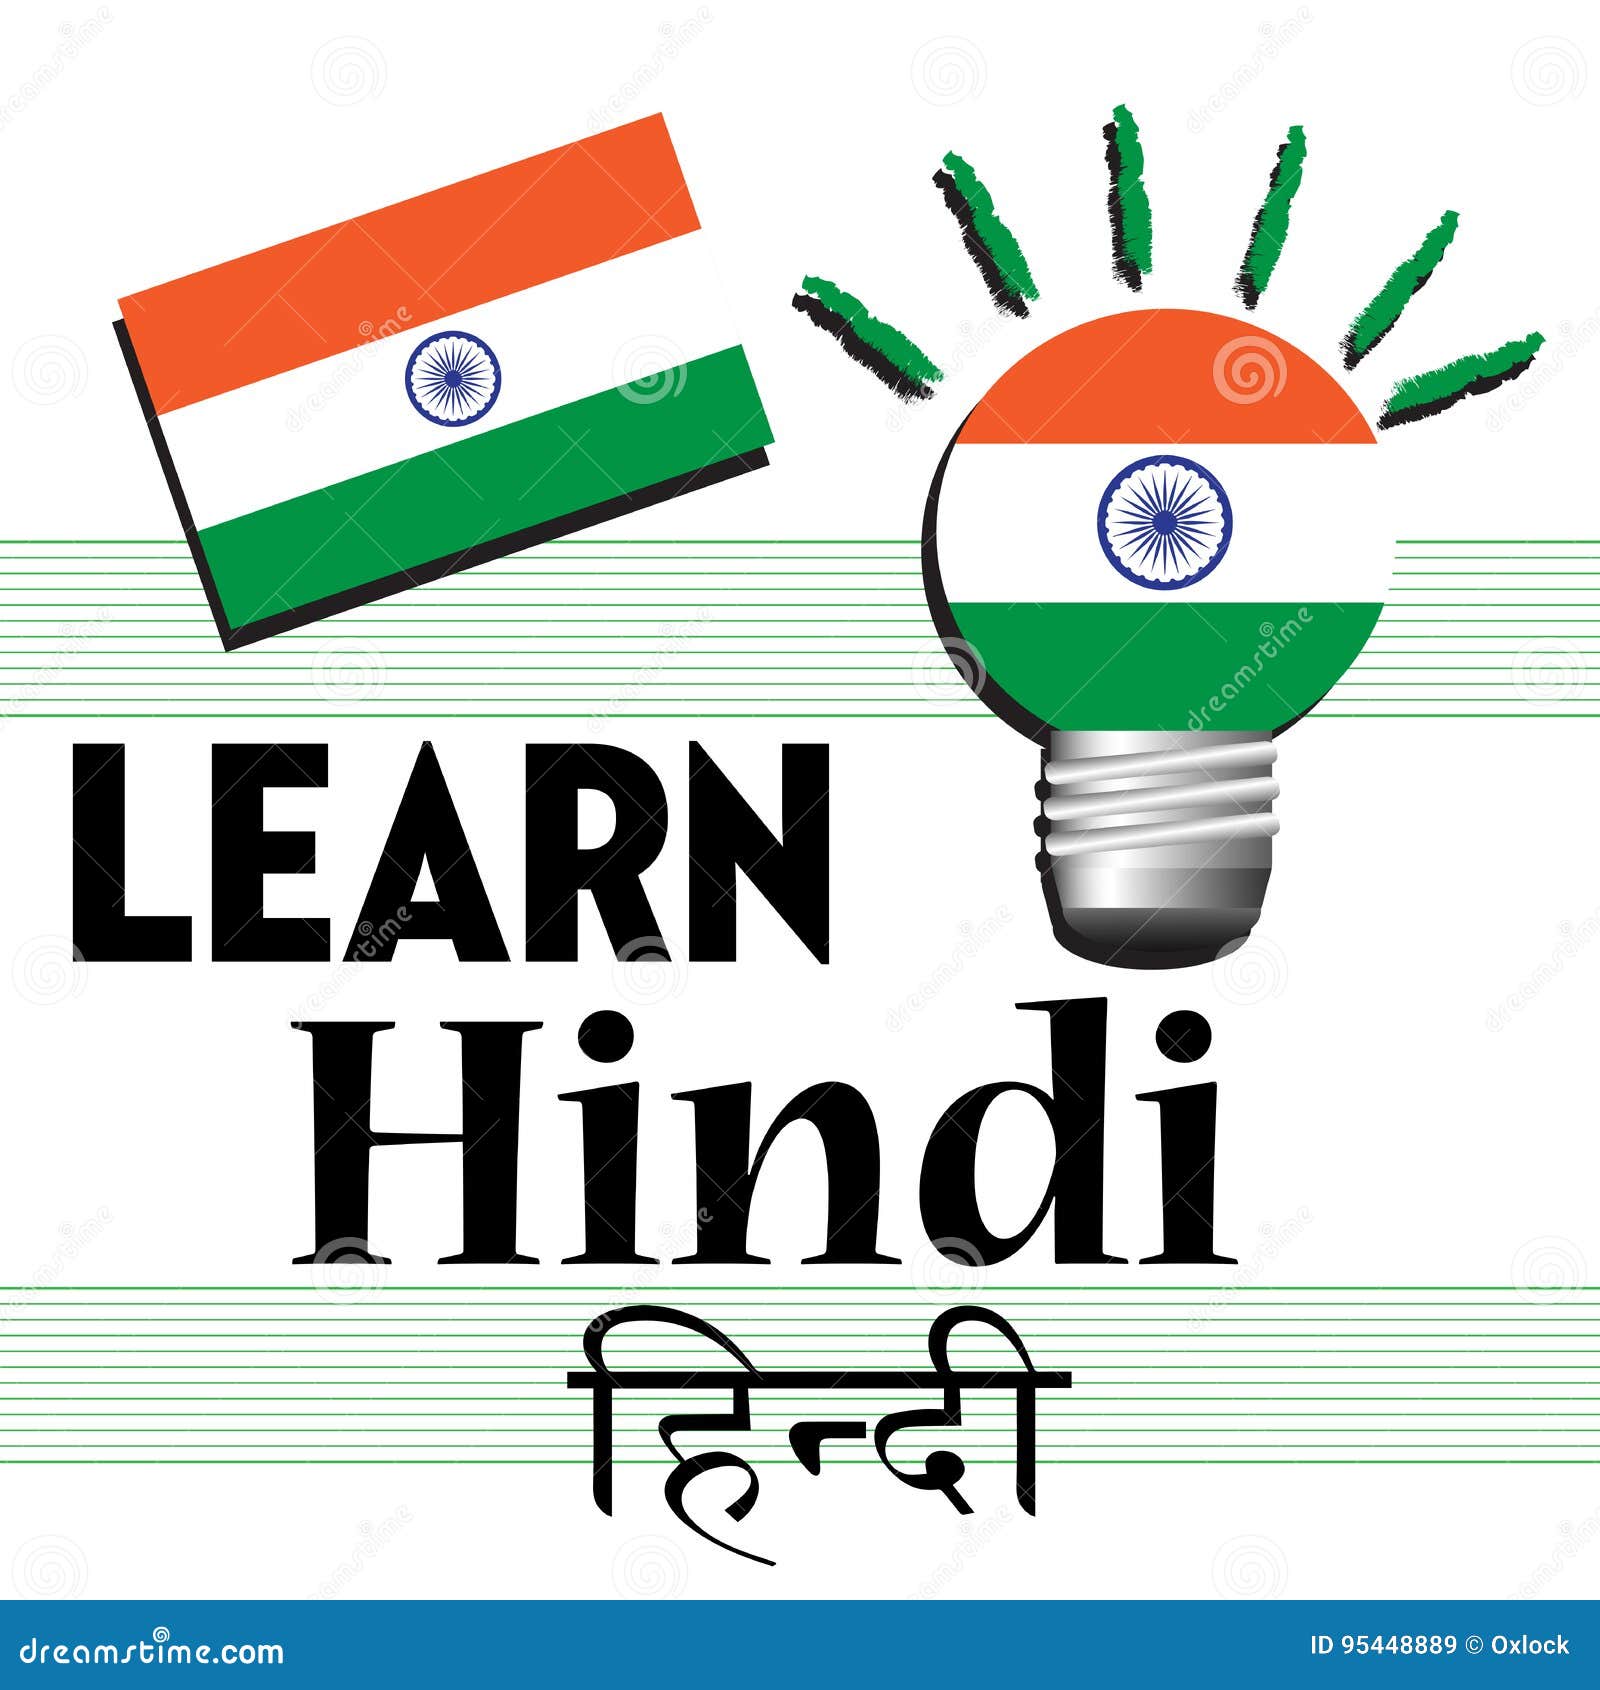 learn-hindi-colorful-illustration-indian